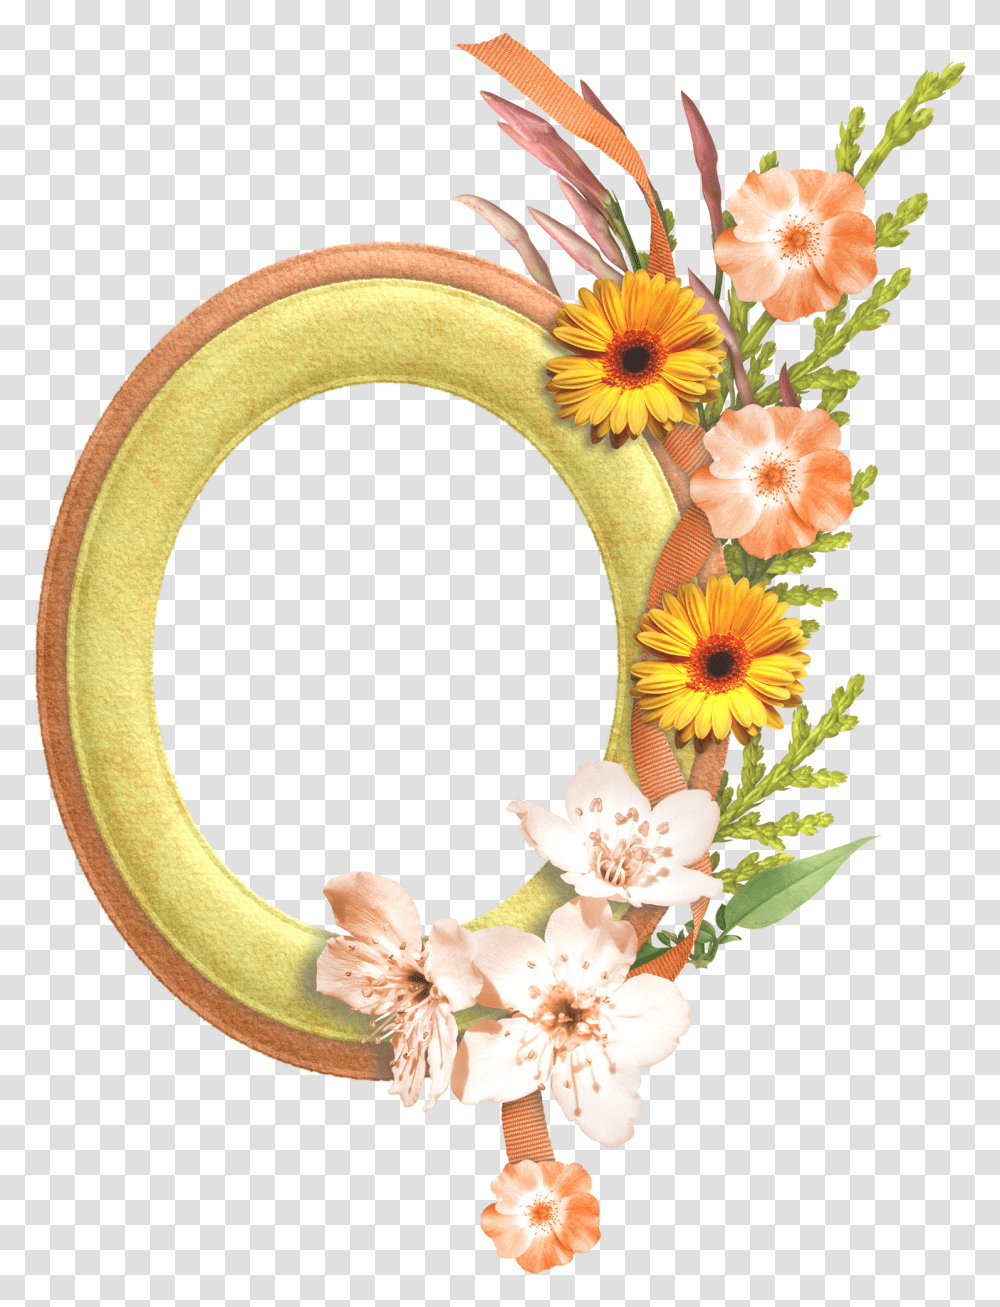 Download Flower Oval Frame Image With No Background Funeral Frames For Flowers, Plant, Rug, Blossom, Wreath Transparent Png